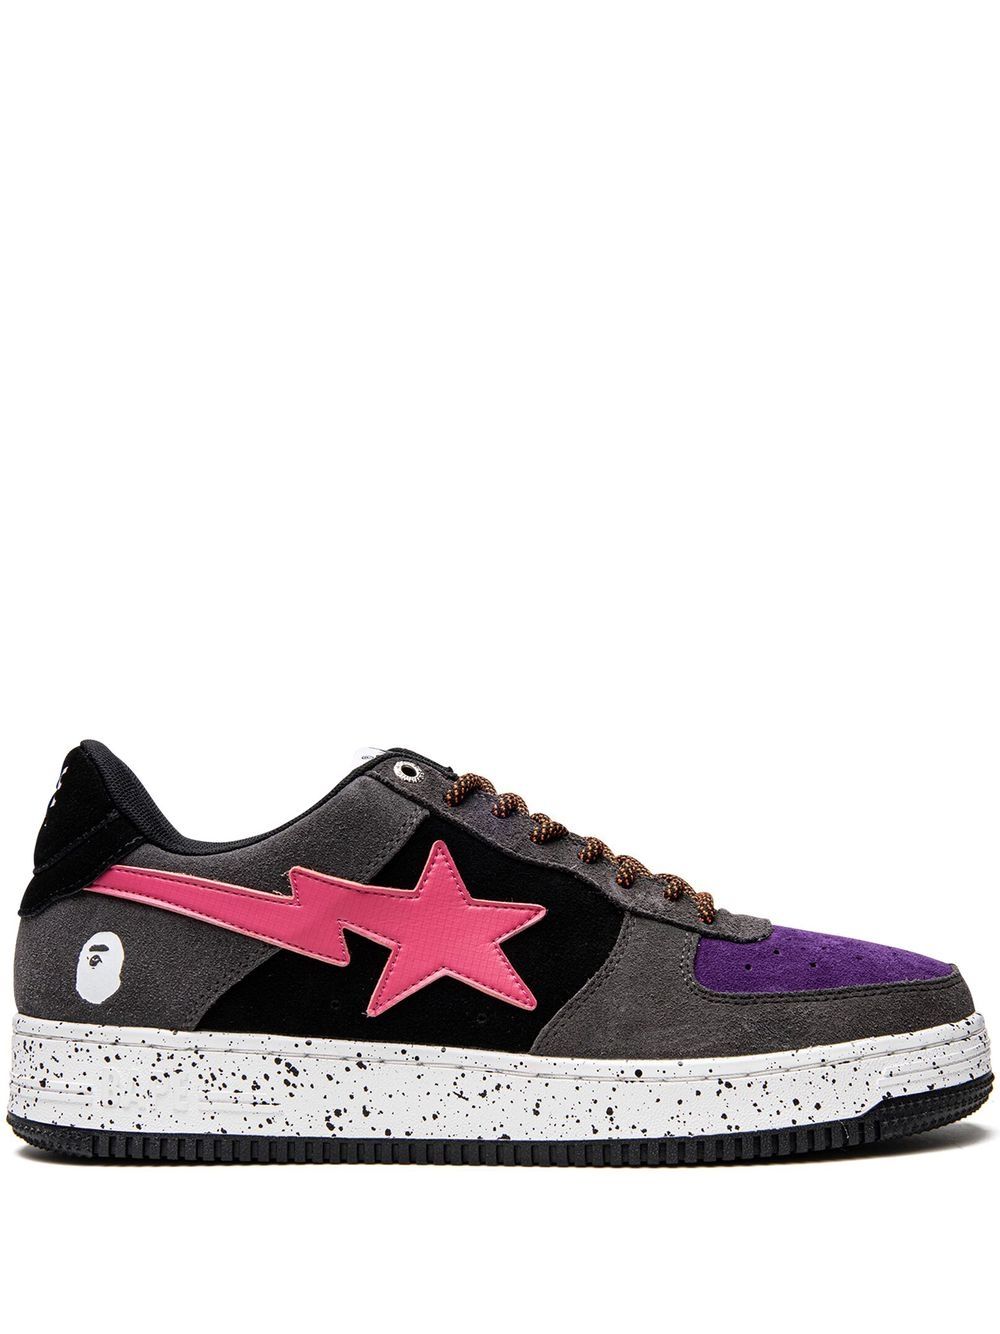 A BATHING APE® BAPE STA #2 M2 "Black/Pink" sneakers